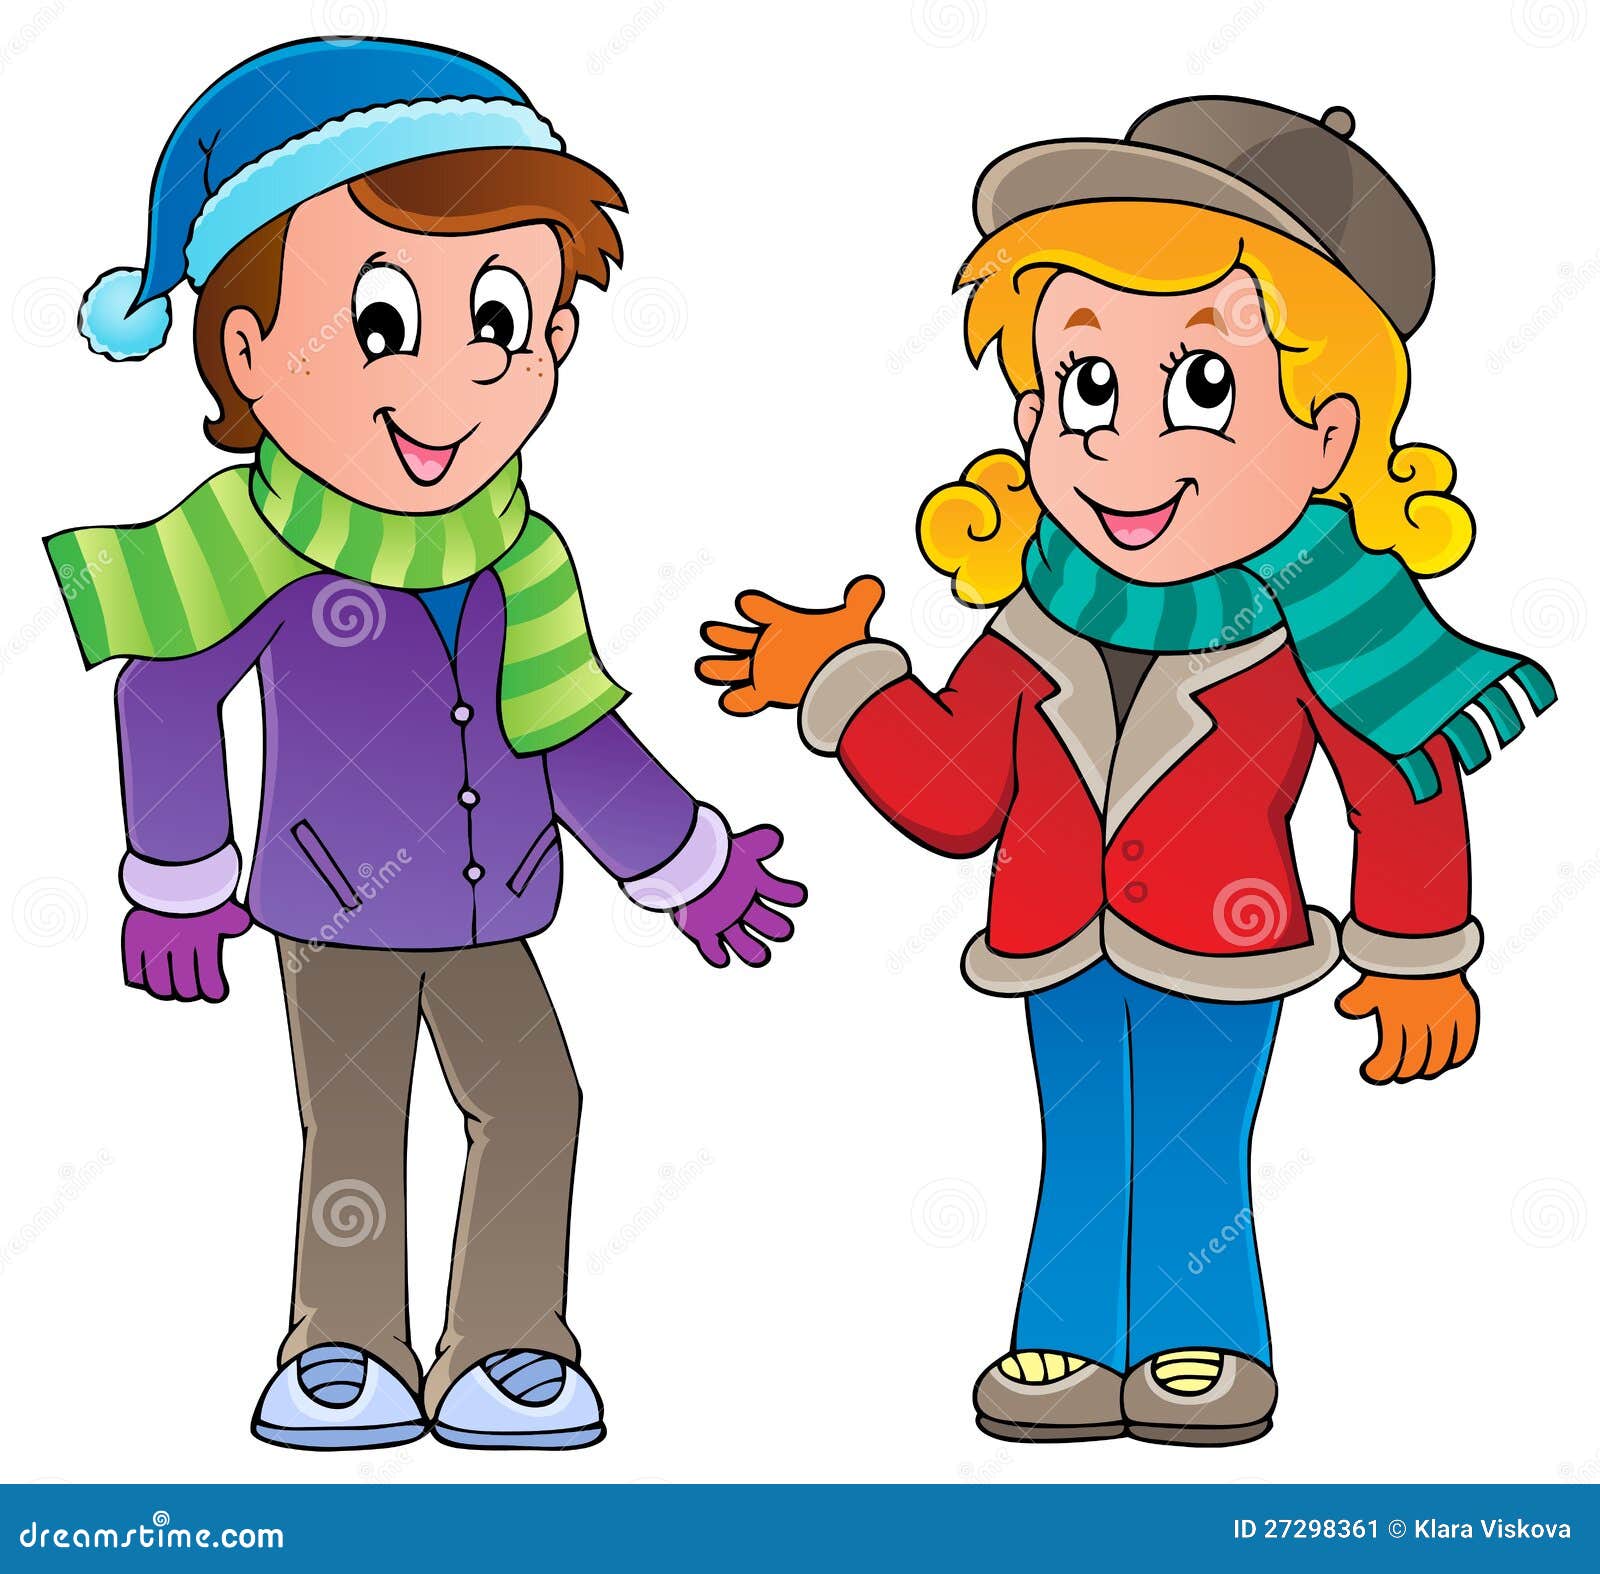 Cartoon kids theme image 1 stock vector. Illustration of people - 27298361